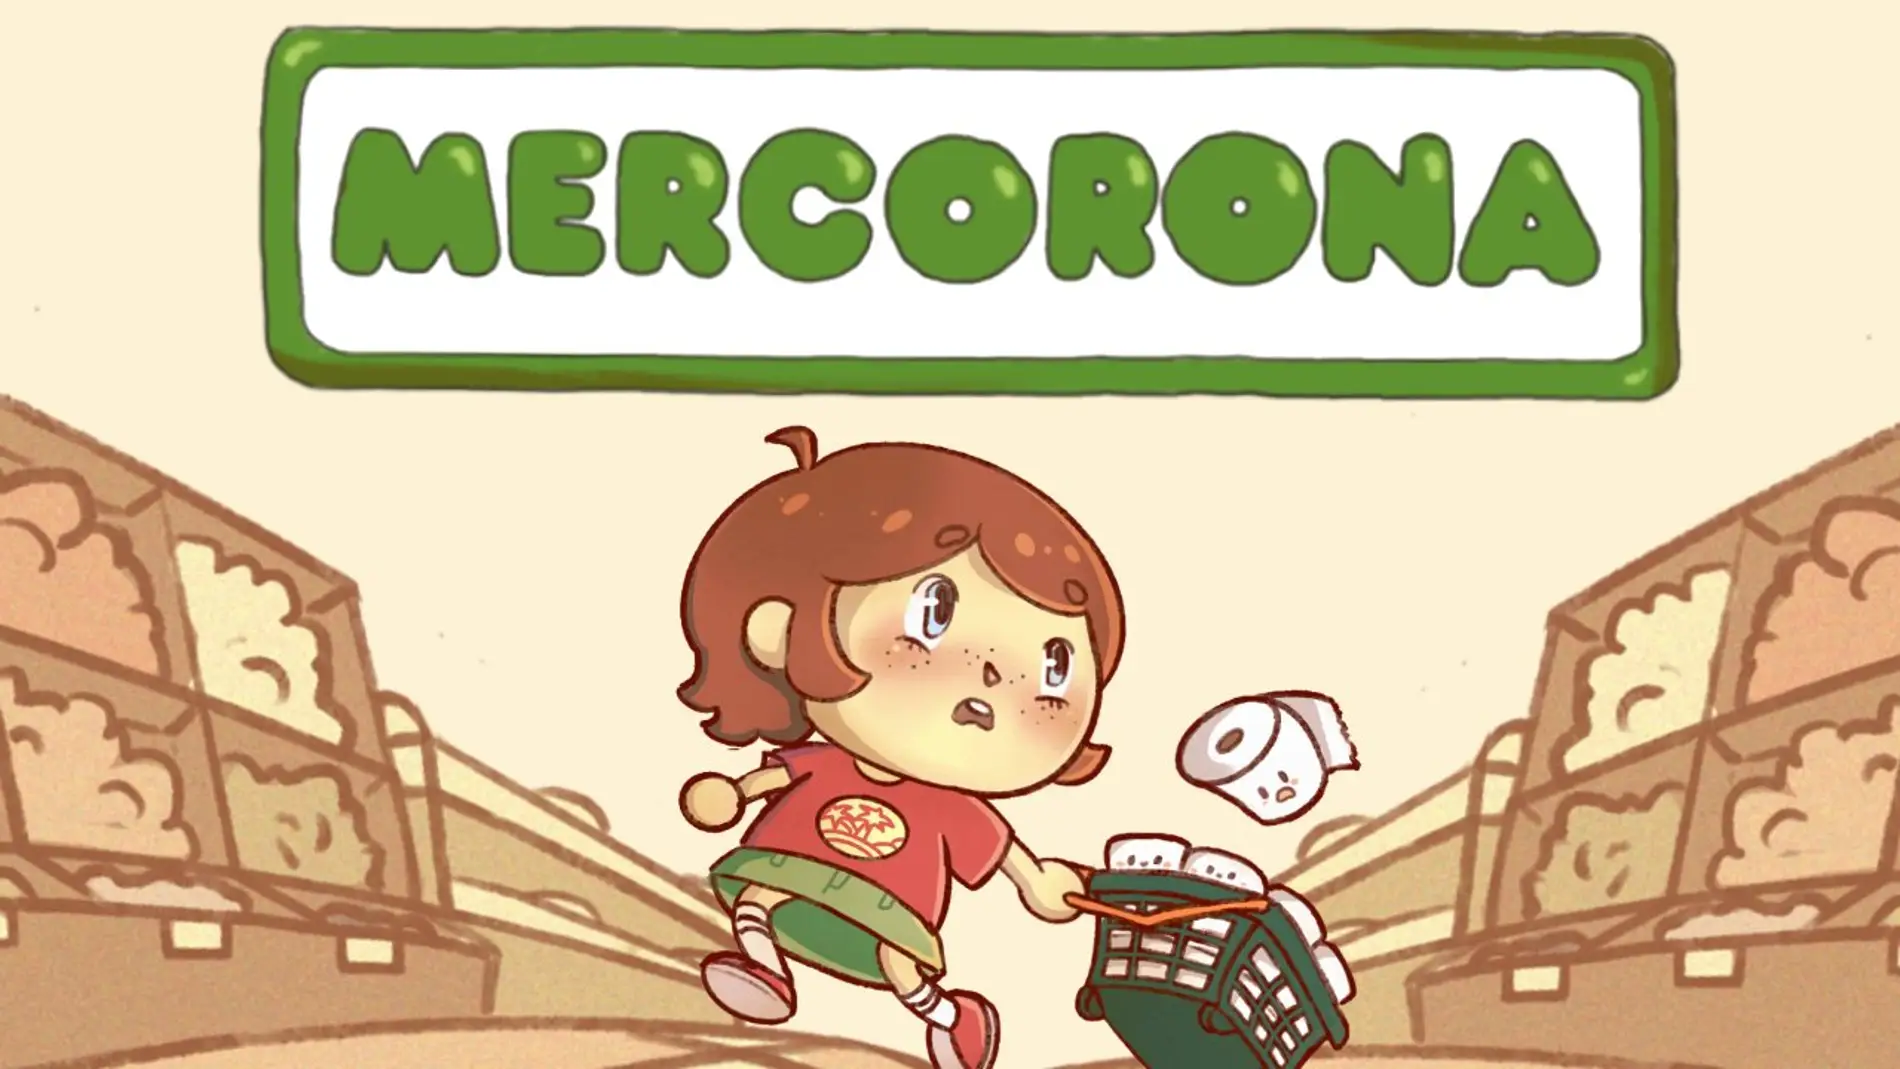 Mercorona